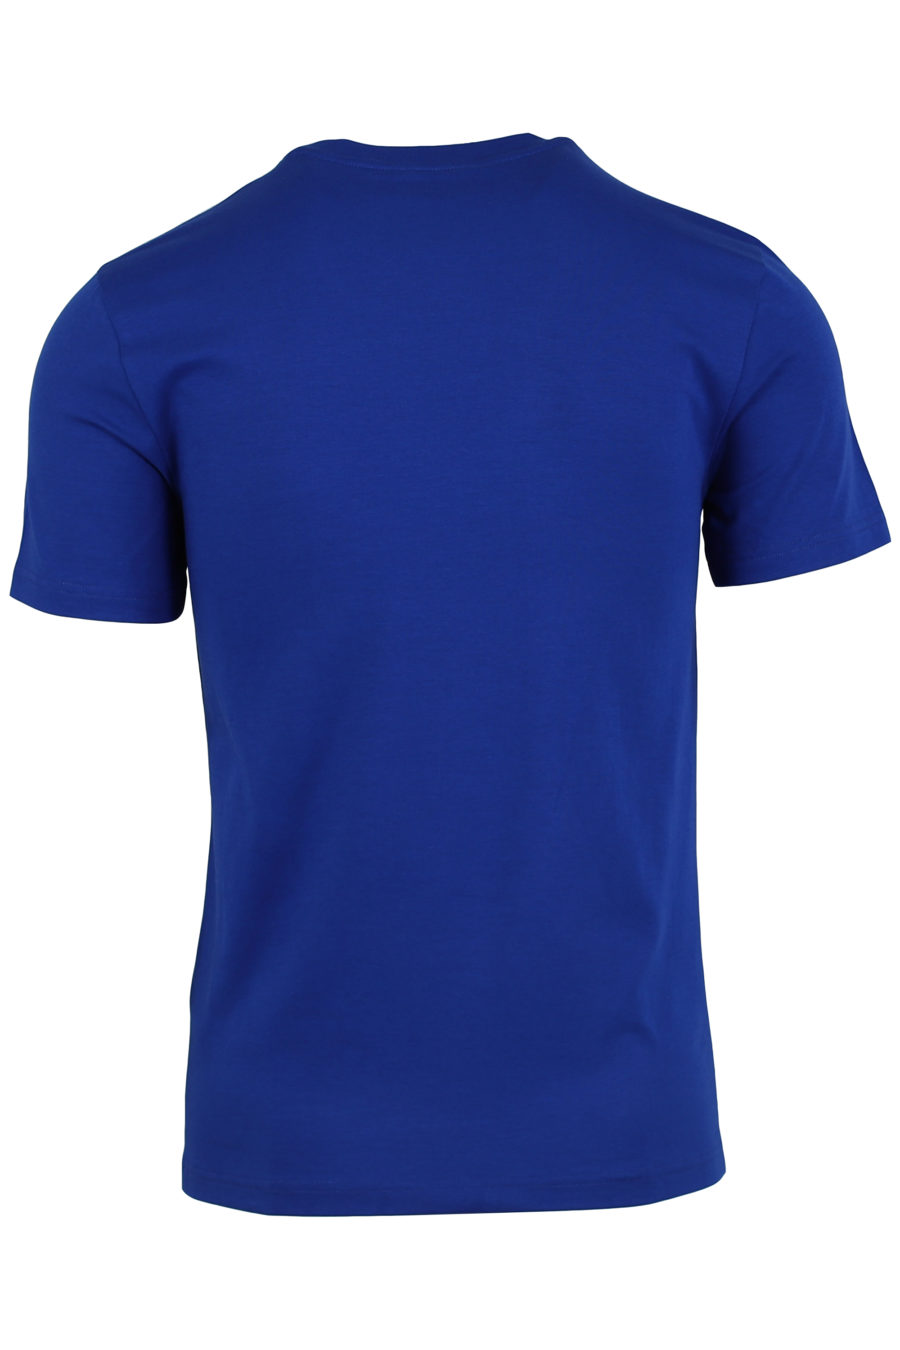 T-shirt bleu logo en couleur or - IMG 0920